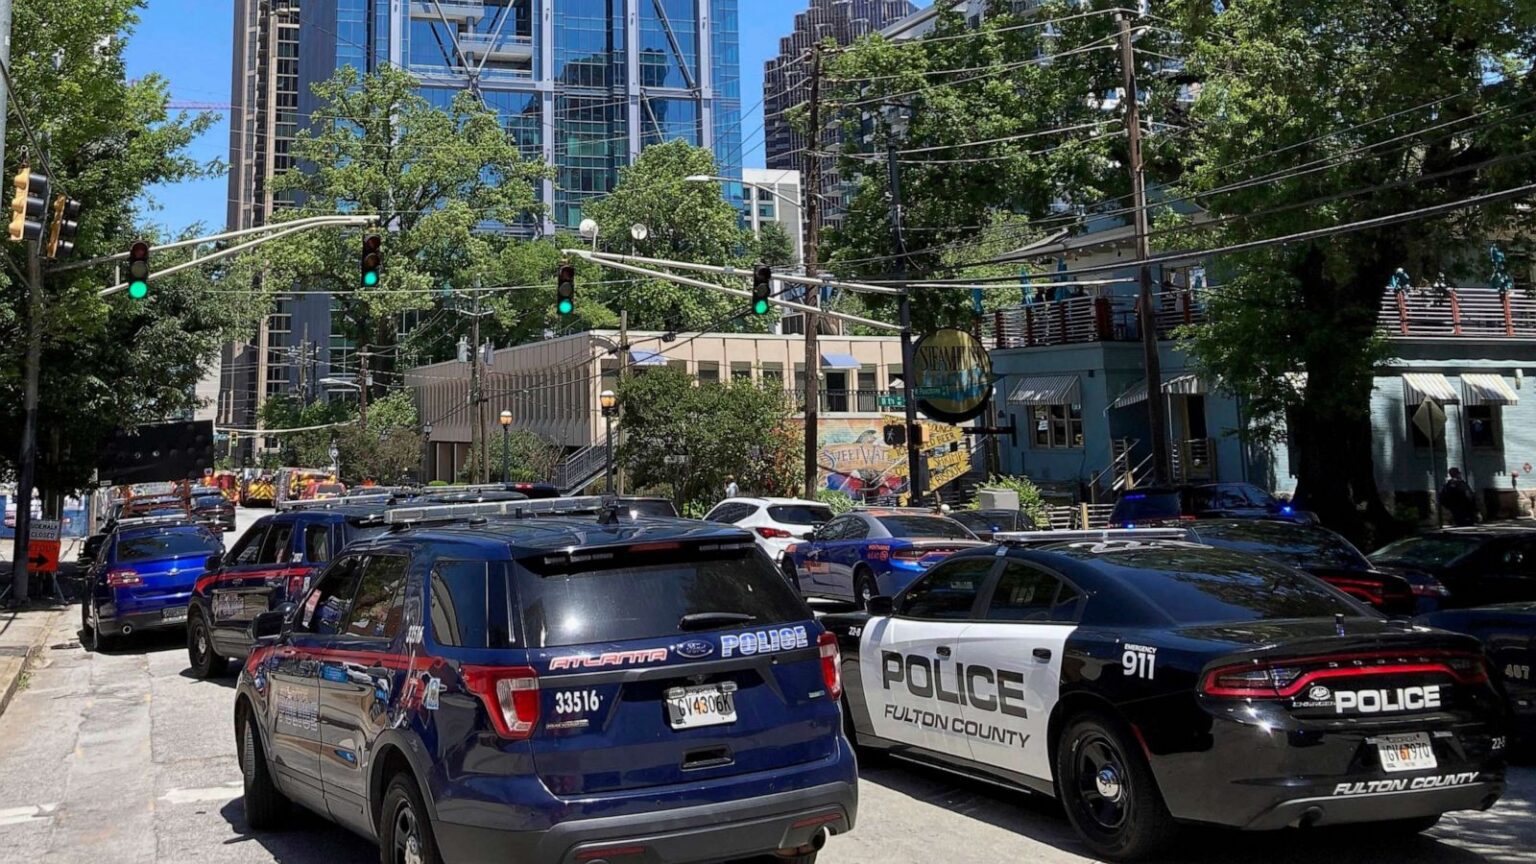 Live updates on Atlanta shootings: 1 killed, 4